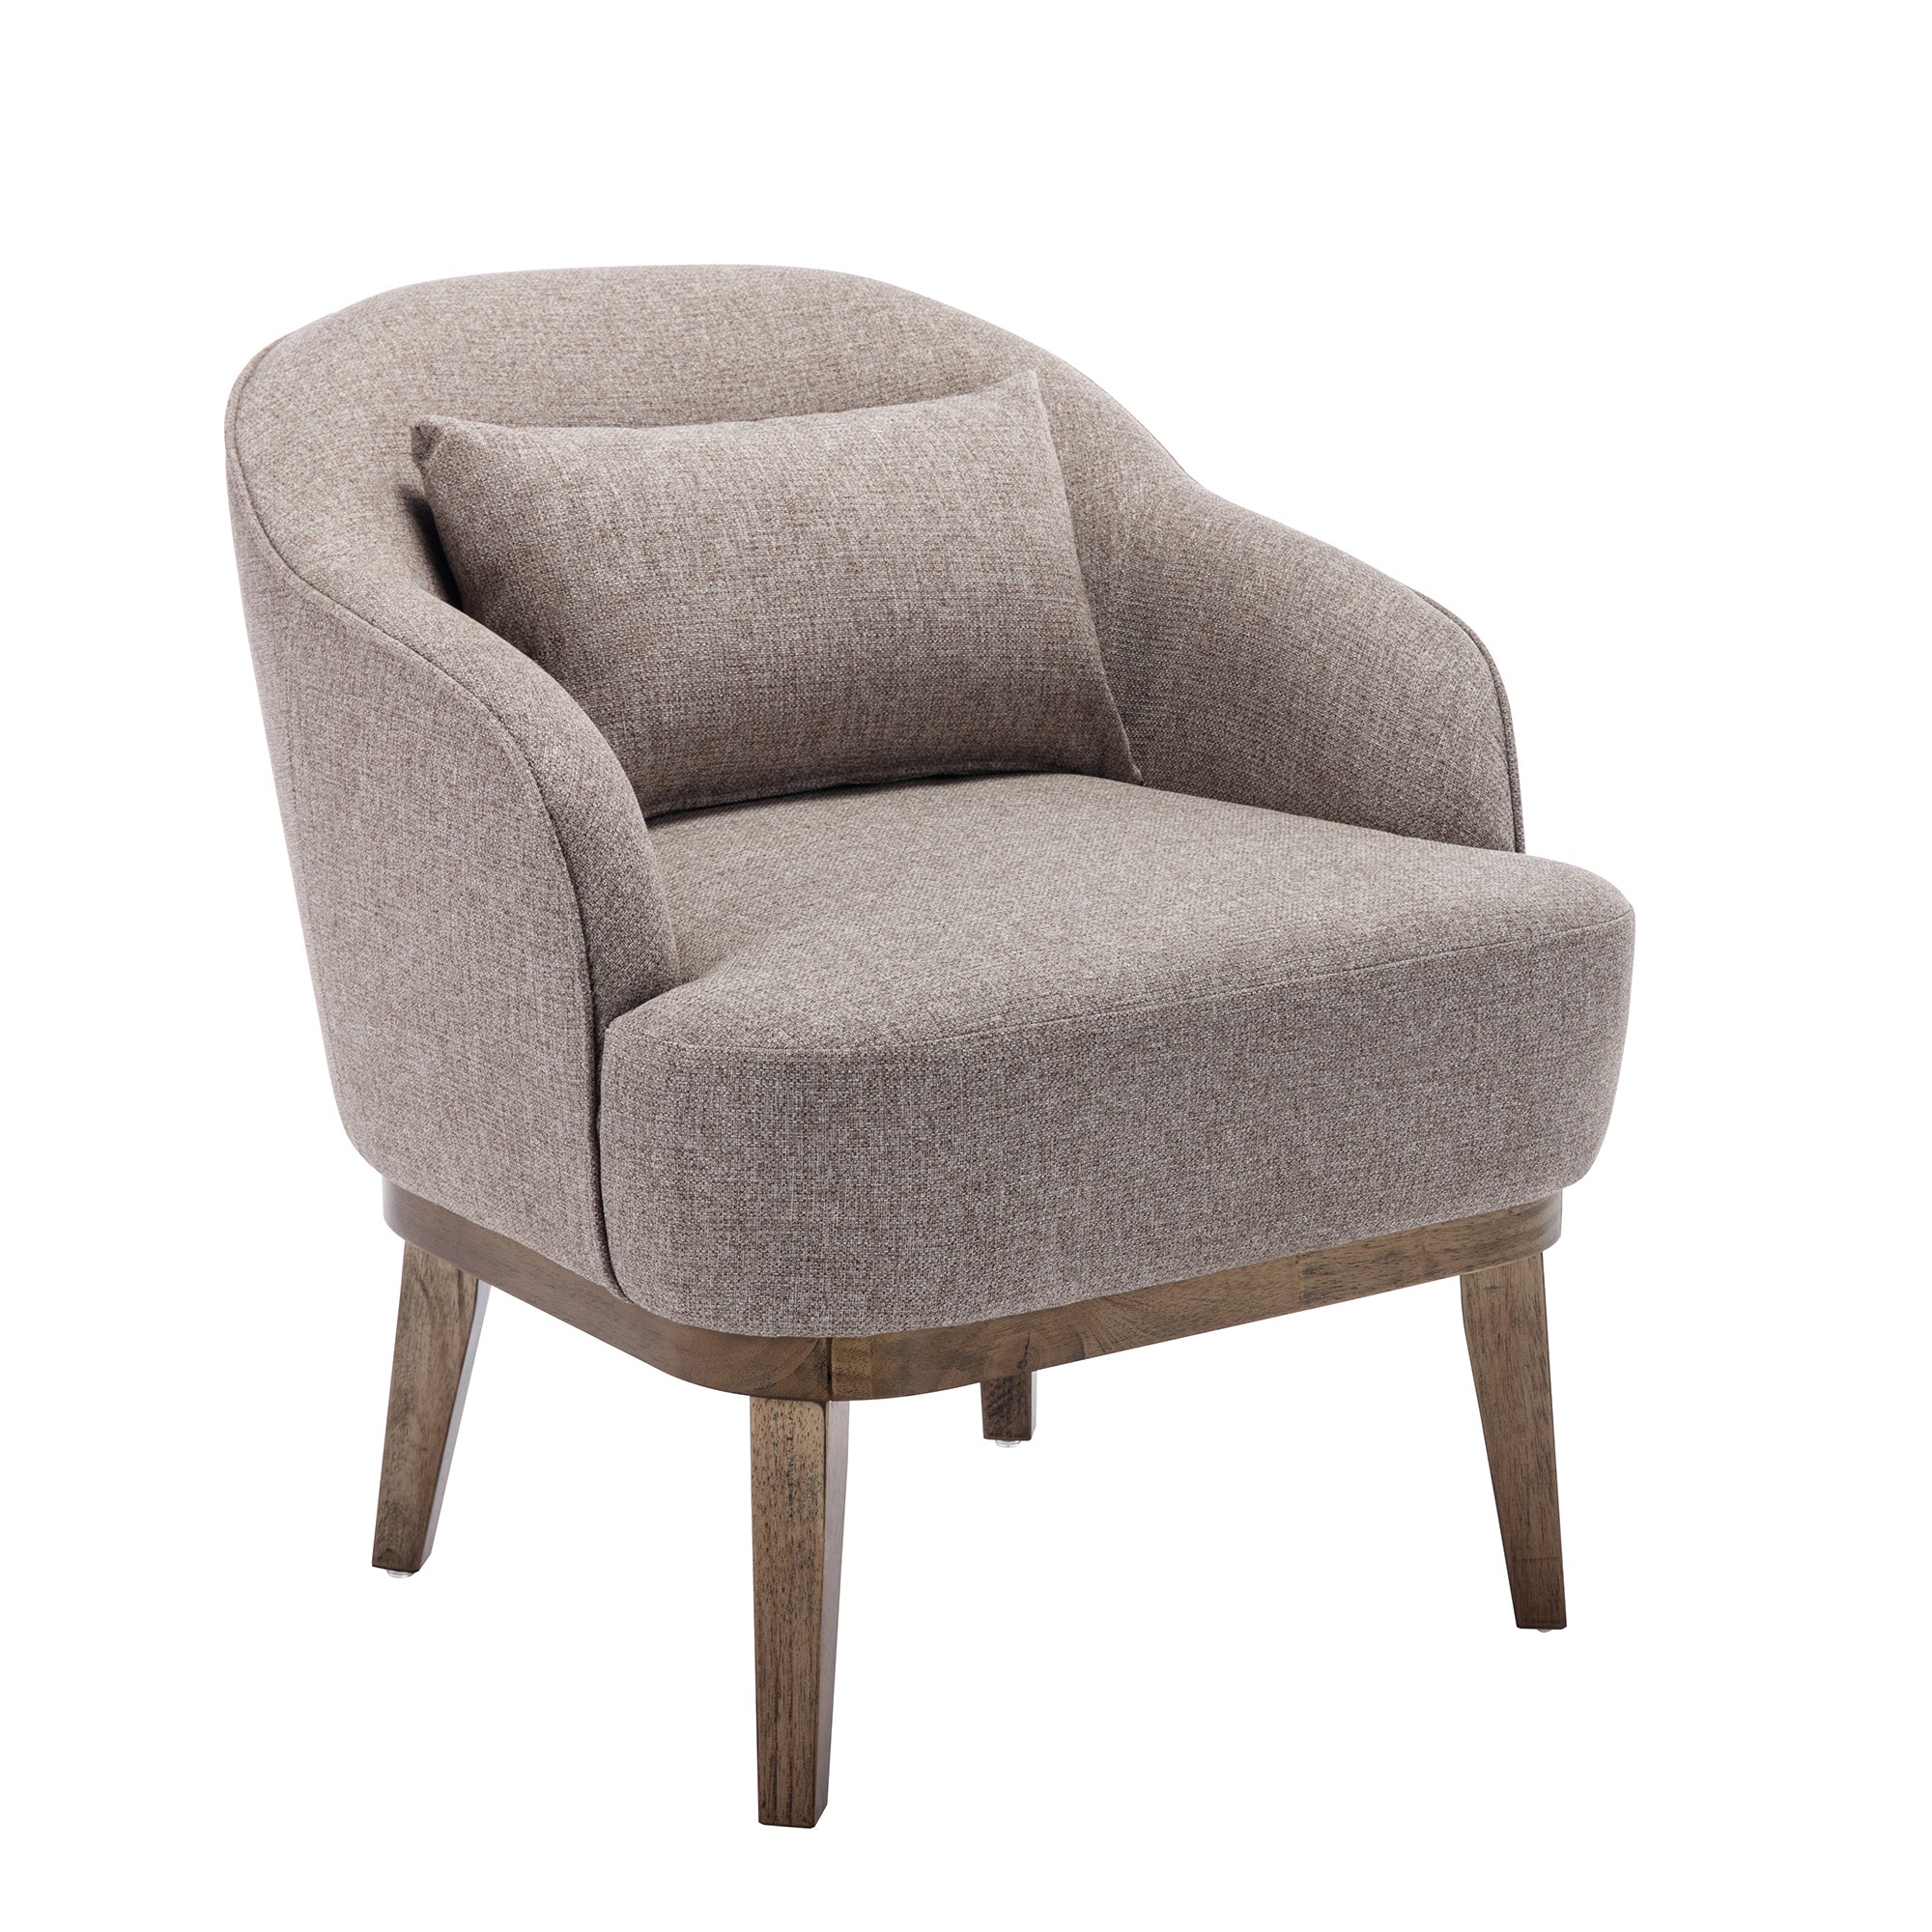 Modern Mid Century Armchair Accent Chair with Pillow tan-linen